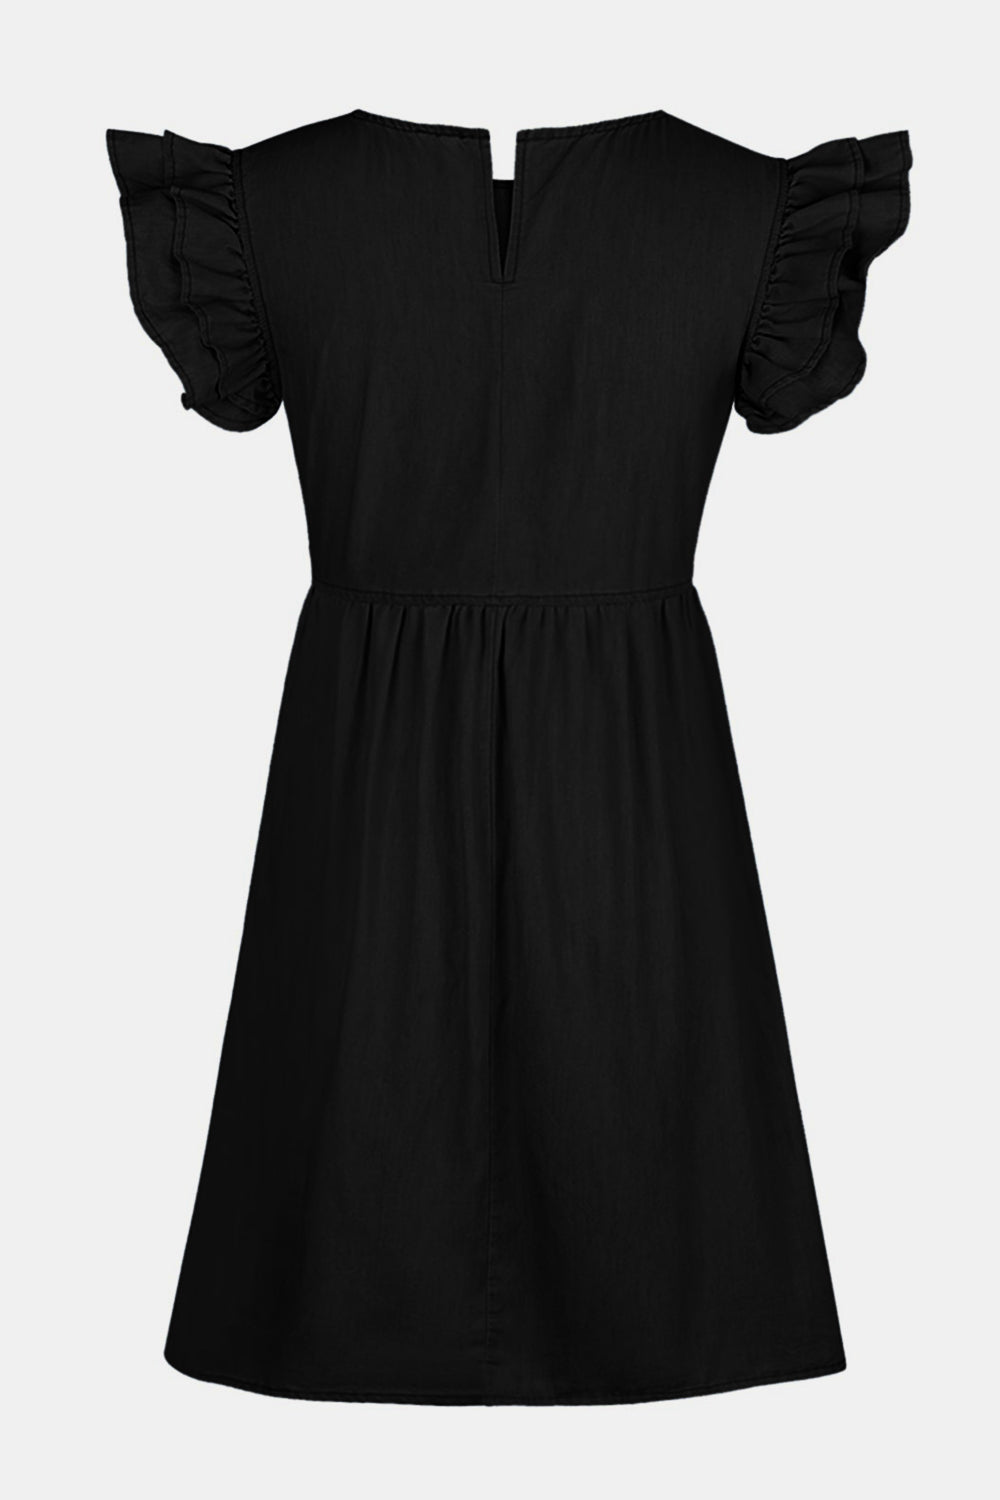 Full Size Ruffled Round Neck Cap Sleeve Denim Dress choice of colors